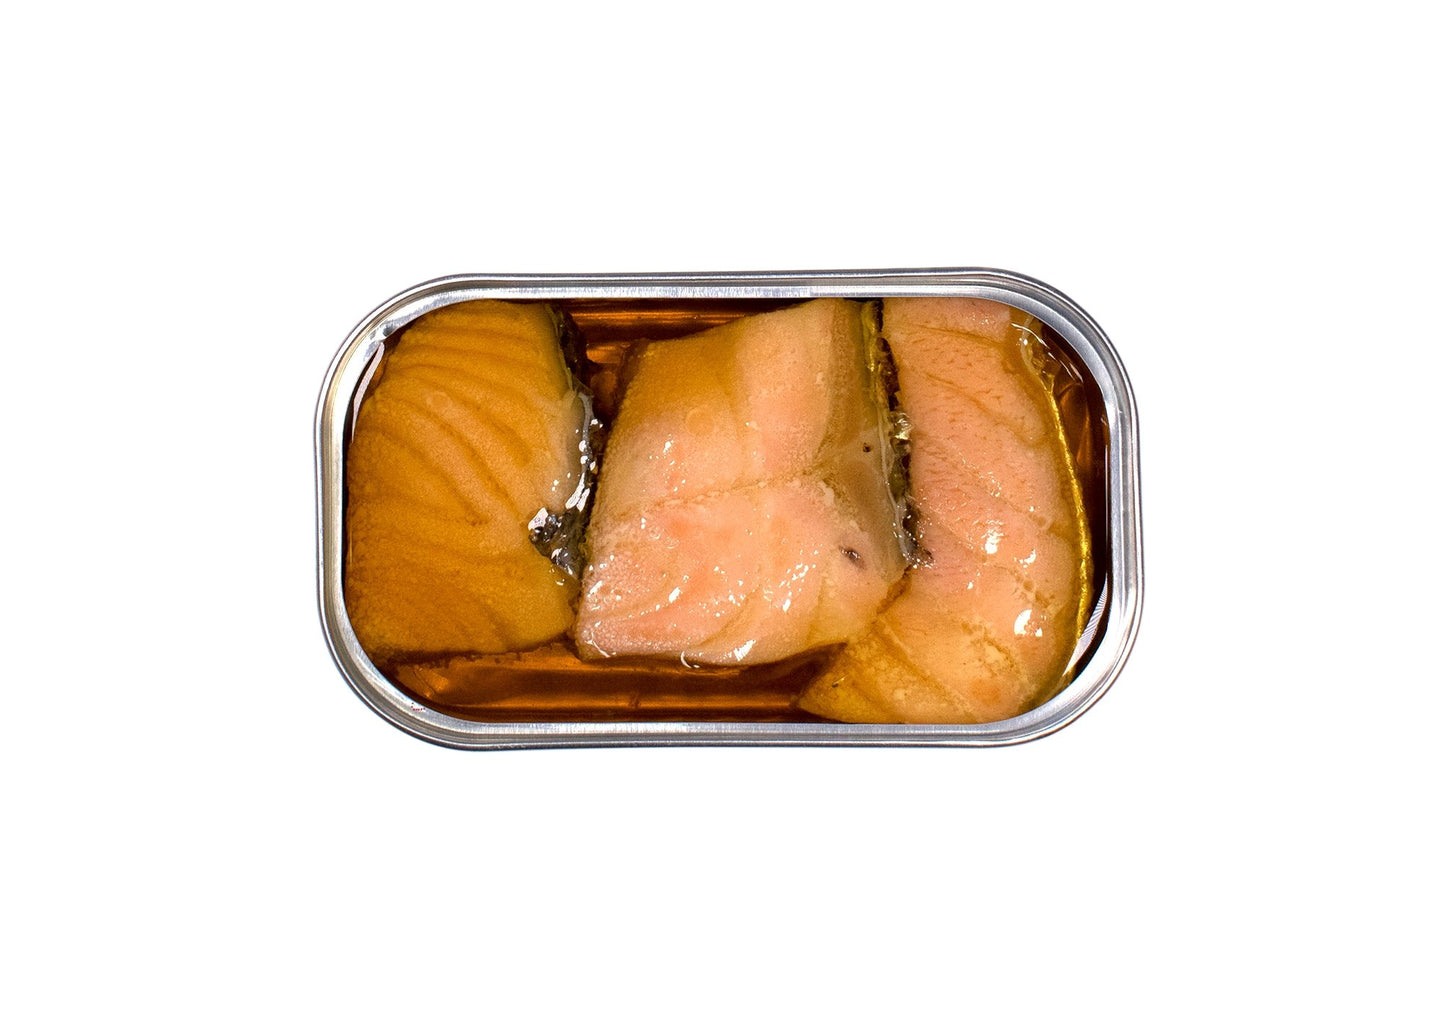 Smoked Salmon in EVOO, Jose Gourmet, Norway - DECANTsf